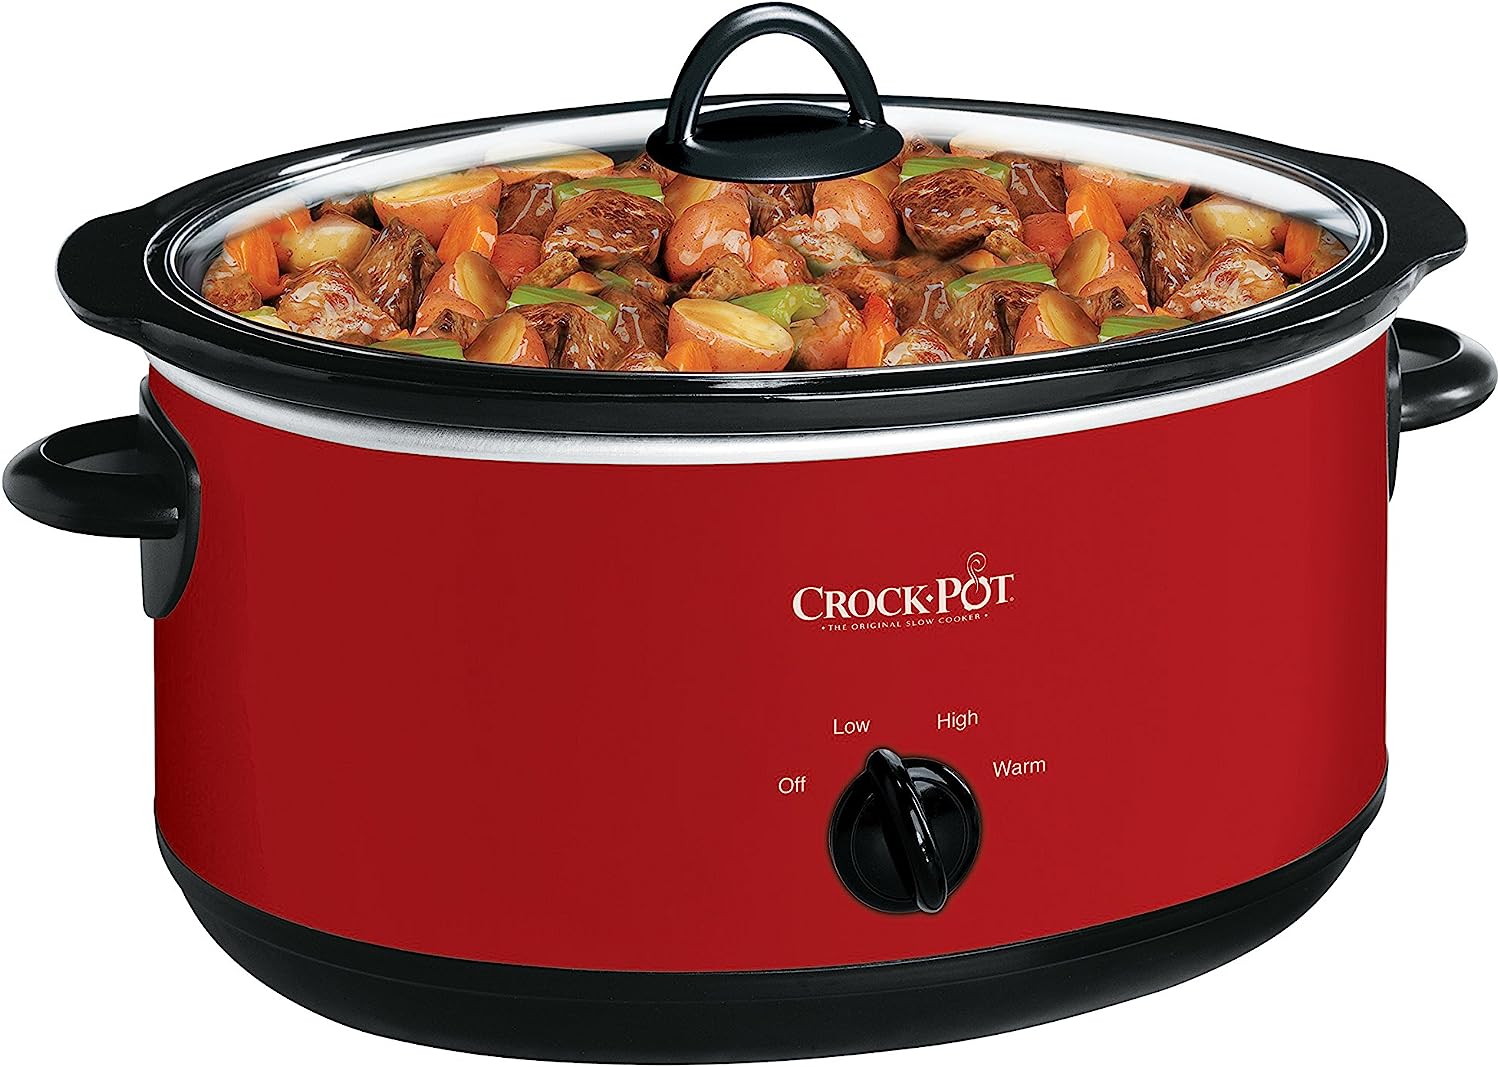 Crock-Pot Large 8 Quart Express Crock Slow Cooker and Food Warmer